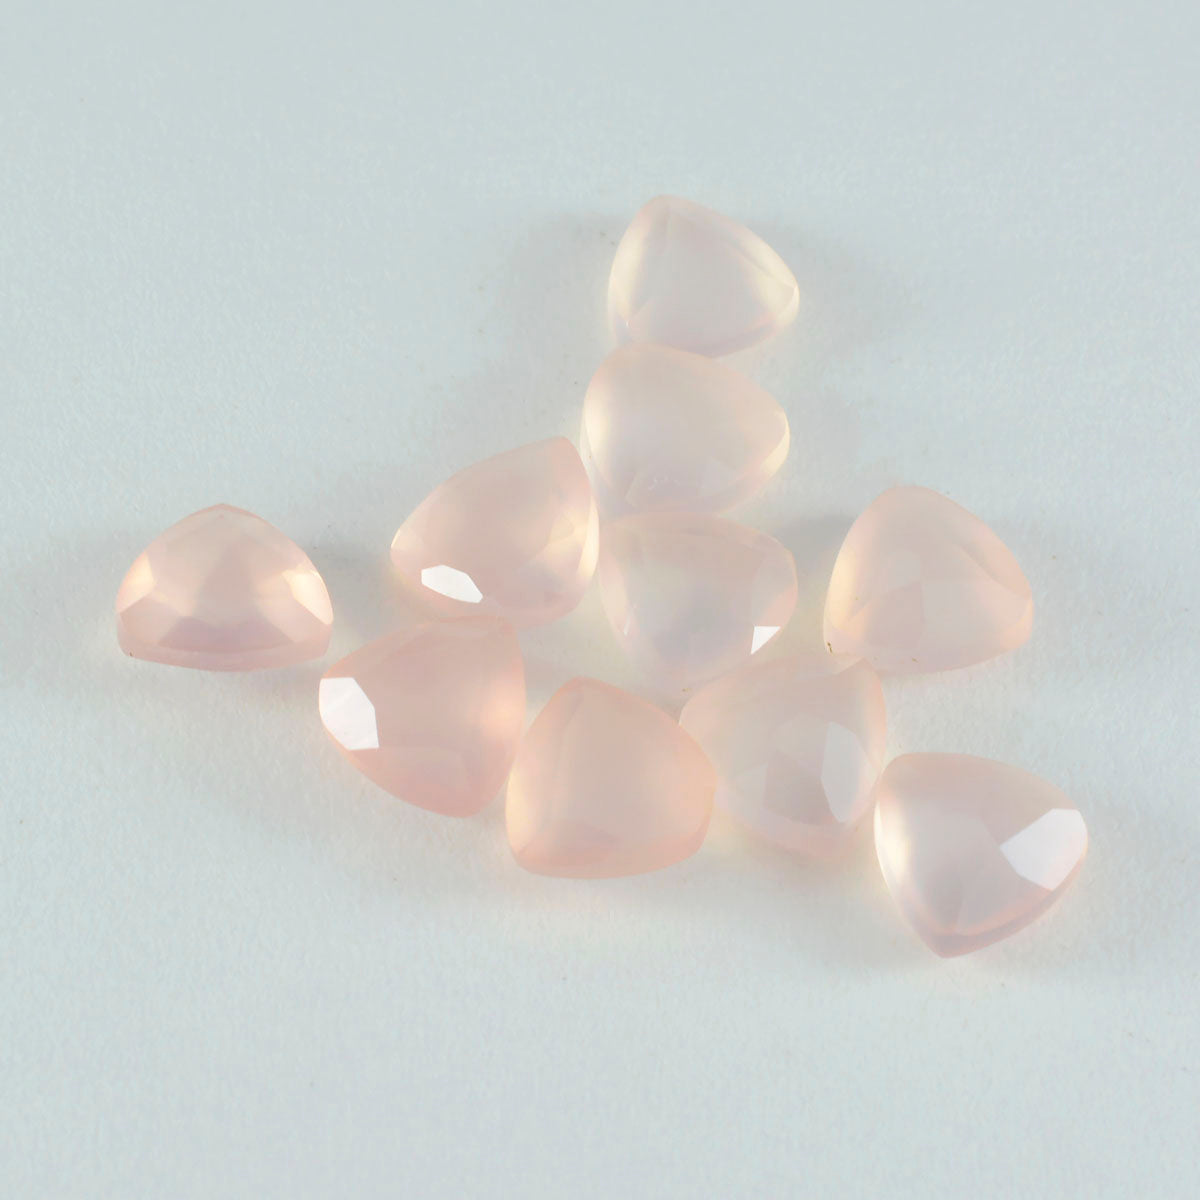 riyogems 1pz quarzo rosa sfaccettato 10x10 mm forma trilioni a+1 gemma di qualità